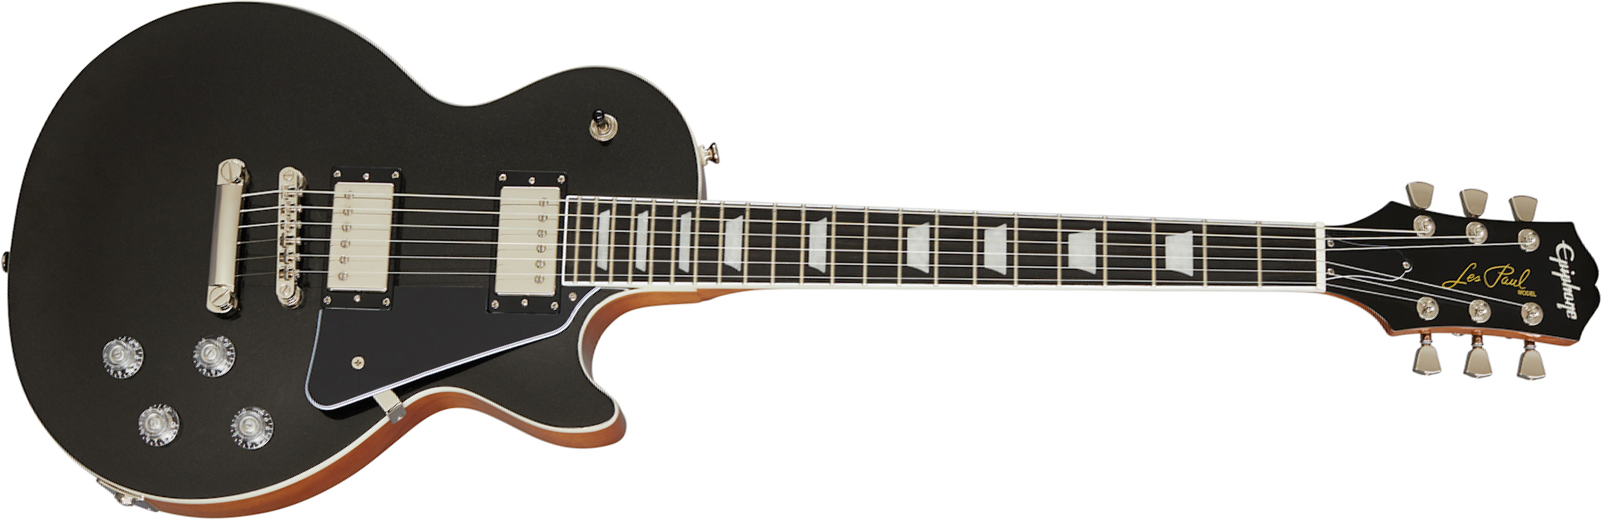 Epiphone Les Paul Modern 2h Ht Eb - Graphite Black - Enkel gesneden elektrische gitaar - Main picture